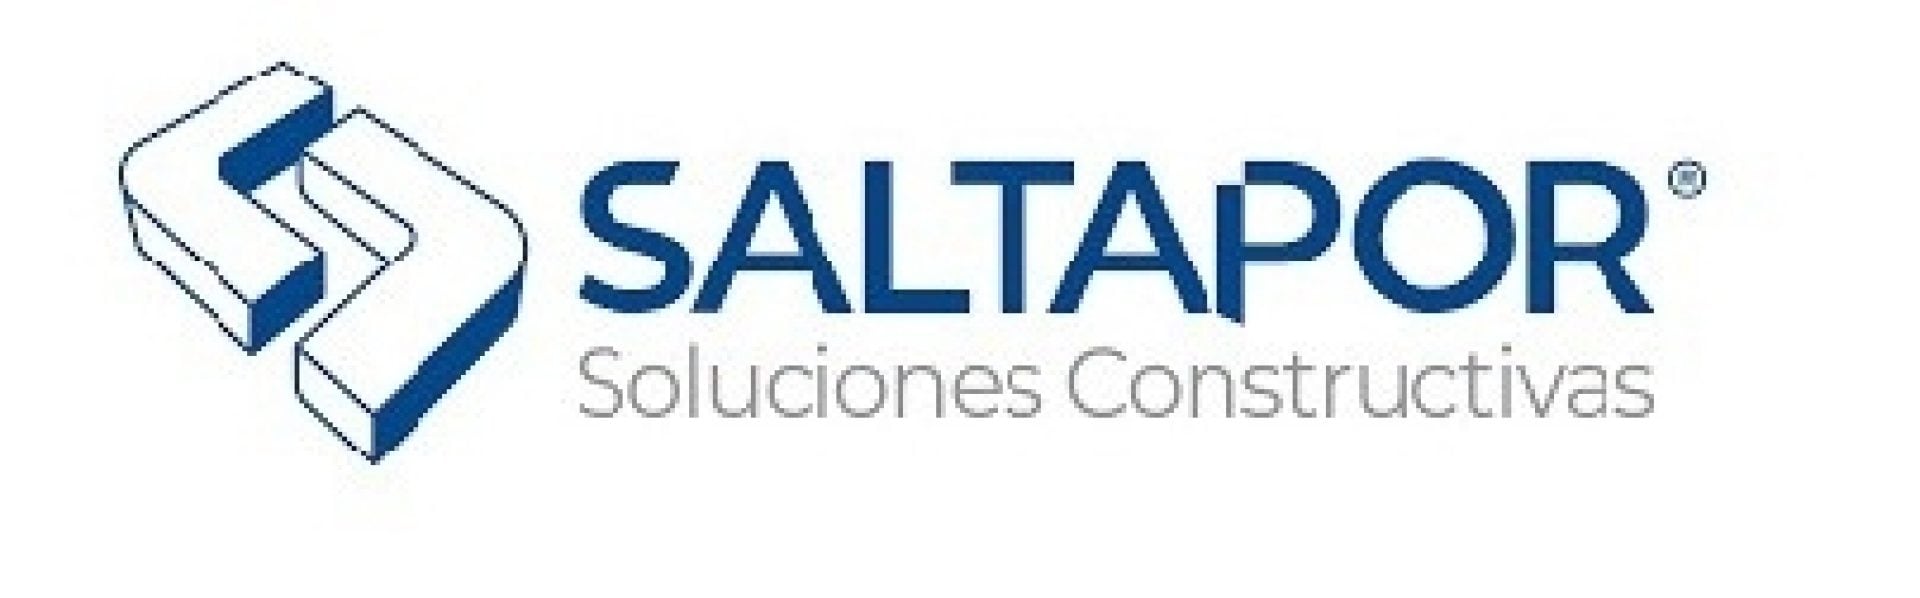 SALTAPOR  - Distribuidor Hilti en Argentina